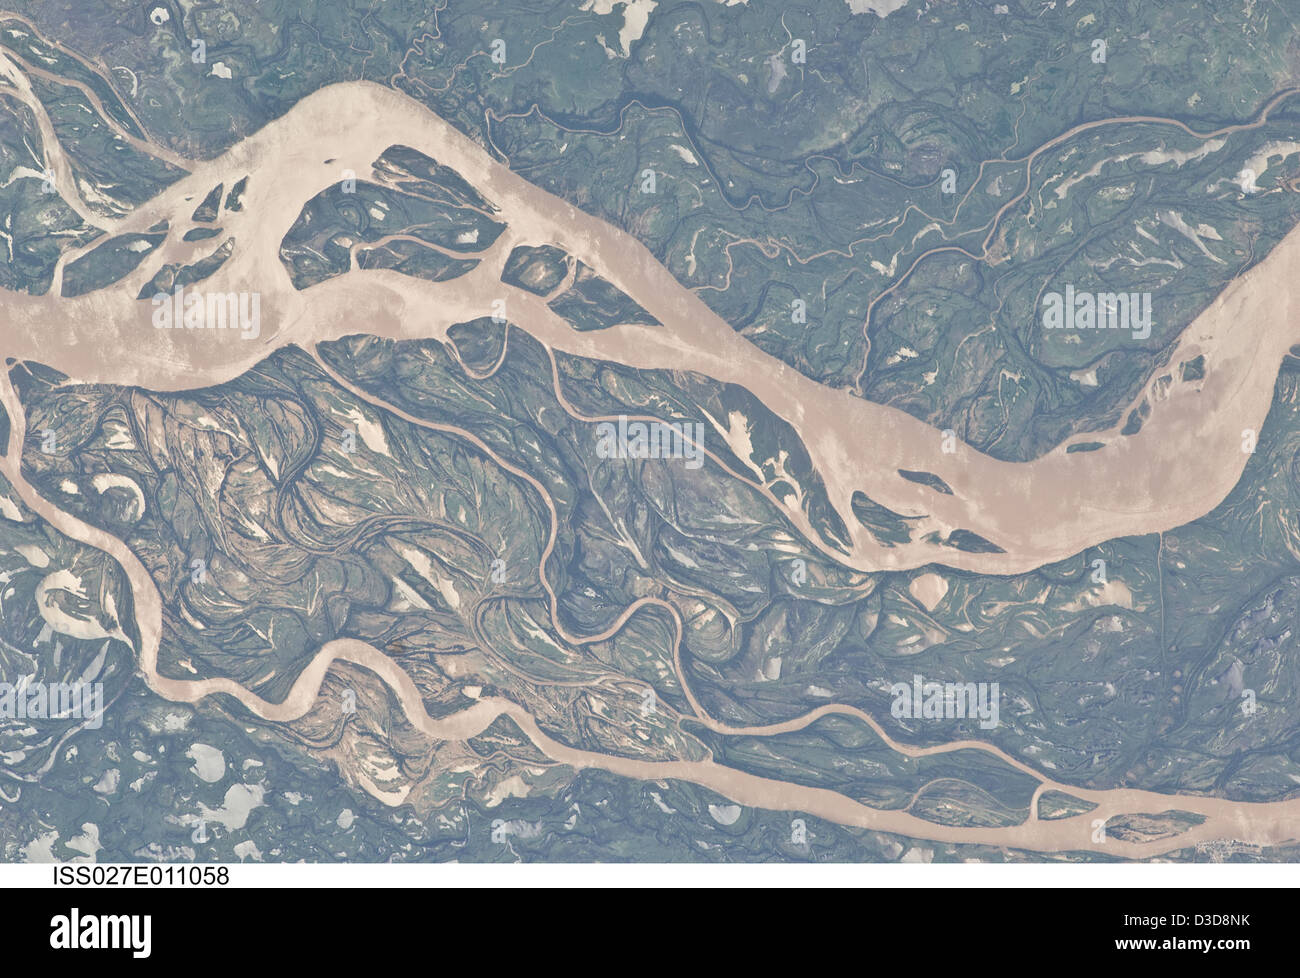 Parana River Floodplain, Northern Argentina (NASA, International Space Station, 04/09/11) Stock Photo